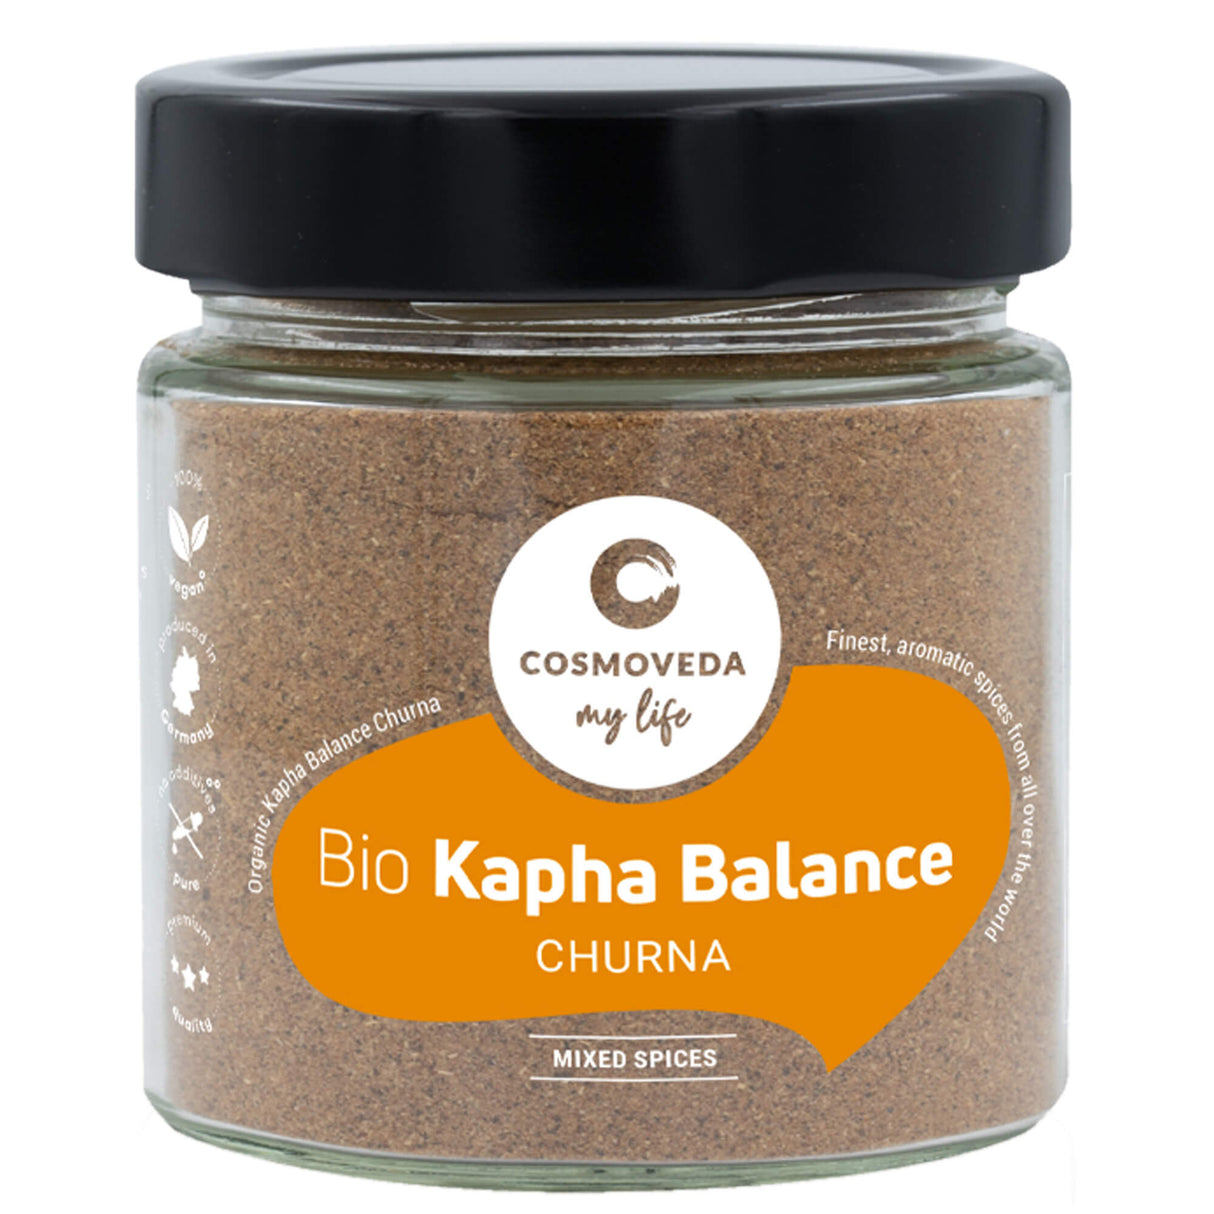 Bio Kapha Balance Churna, 90 g